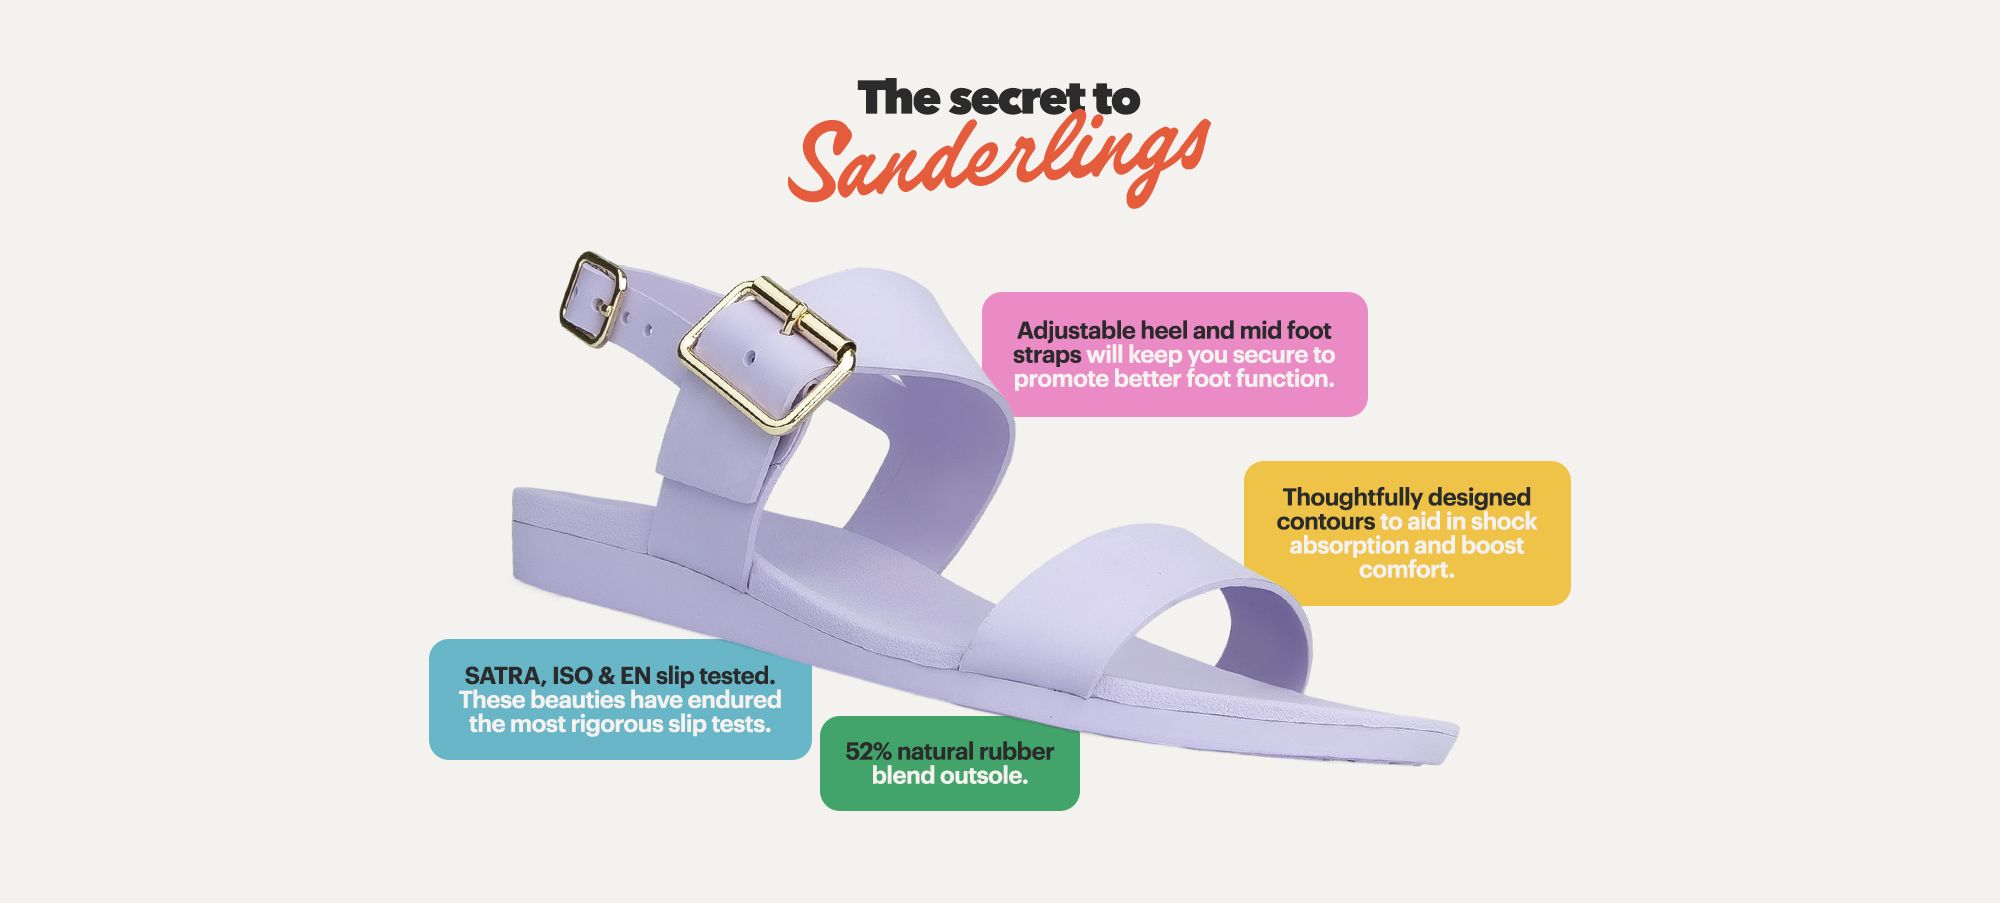 The Secret to Sanderlings